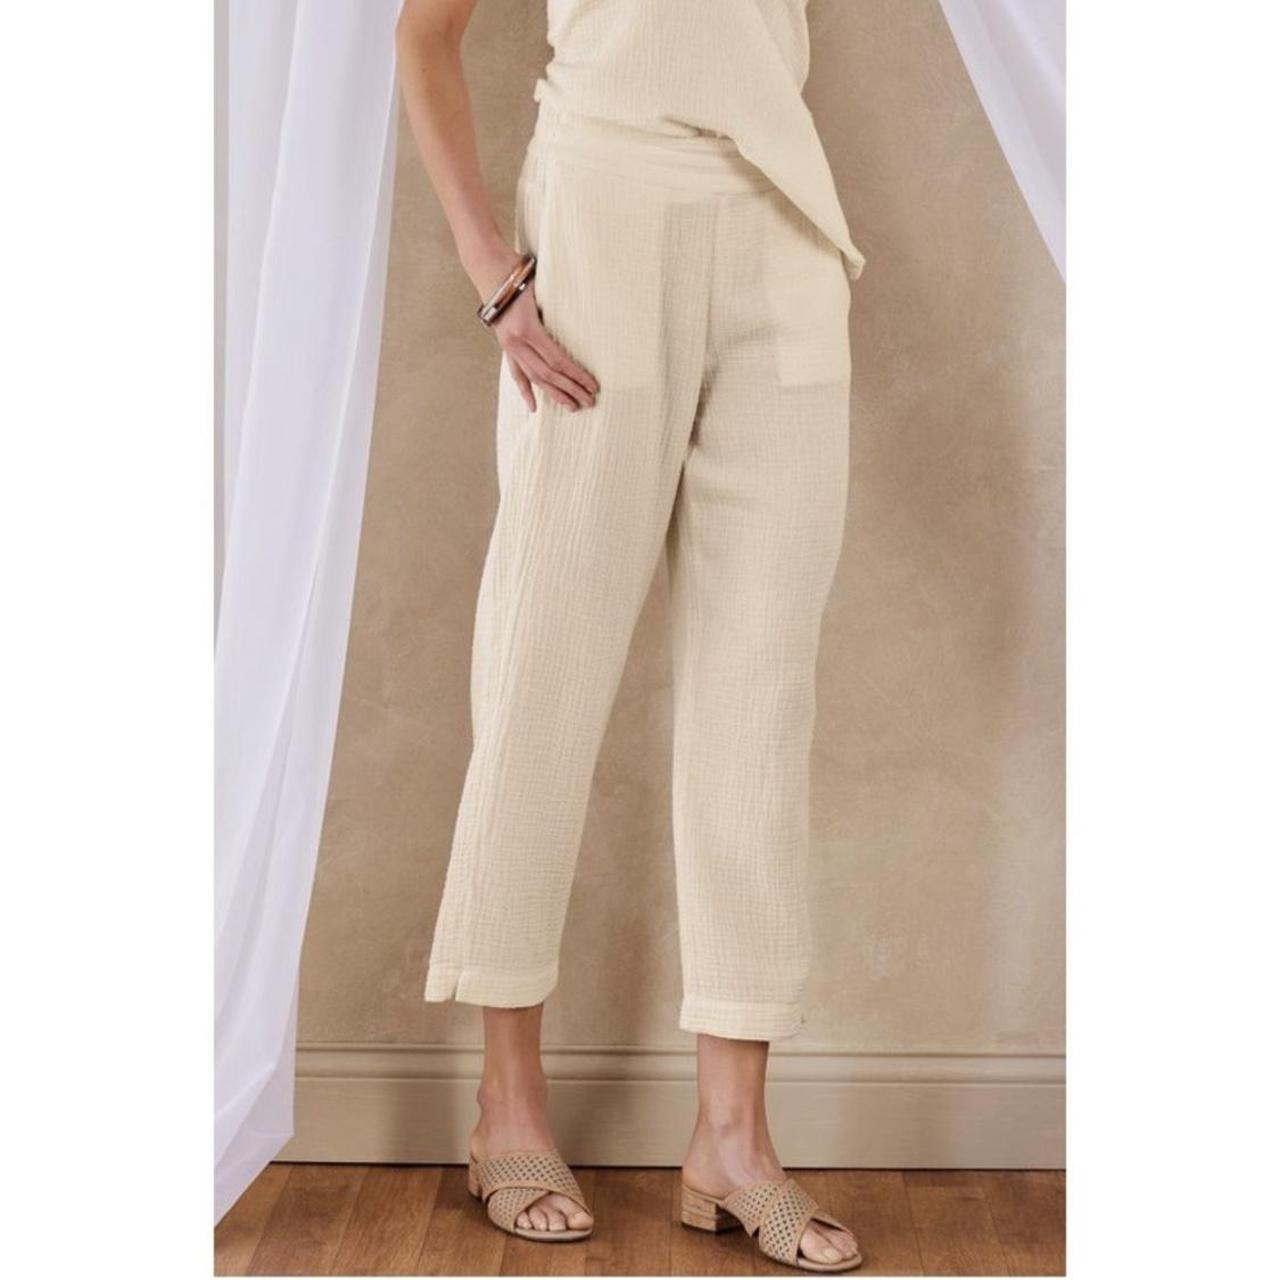 Soft Surroundings 100% Cotton Solid Tan Casual Pants Size XL